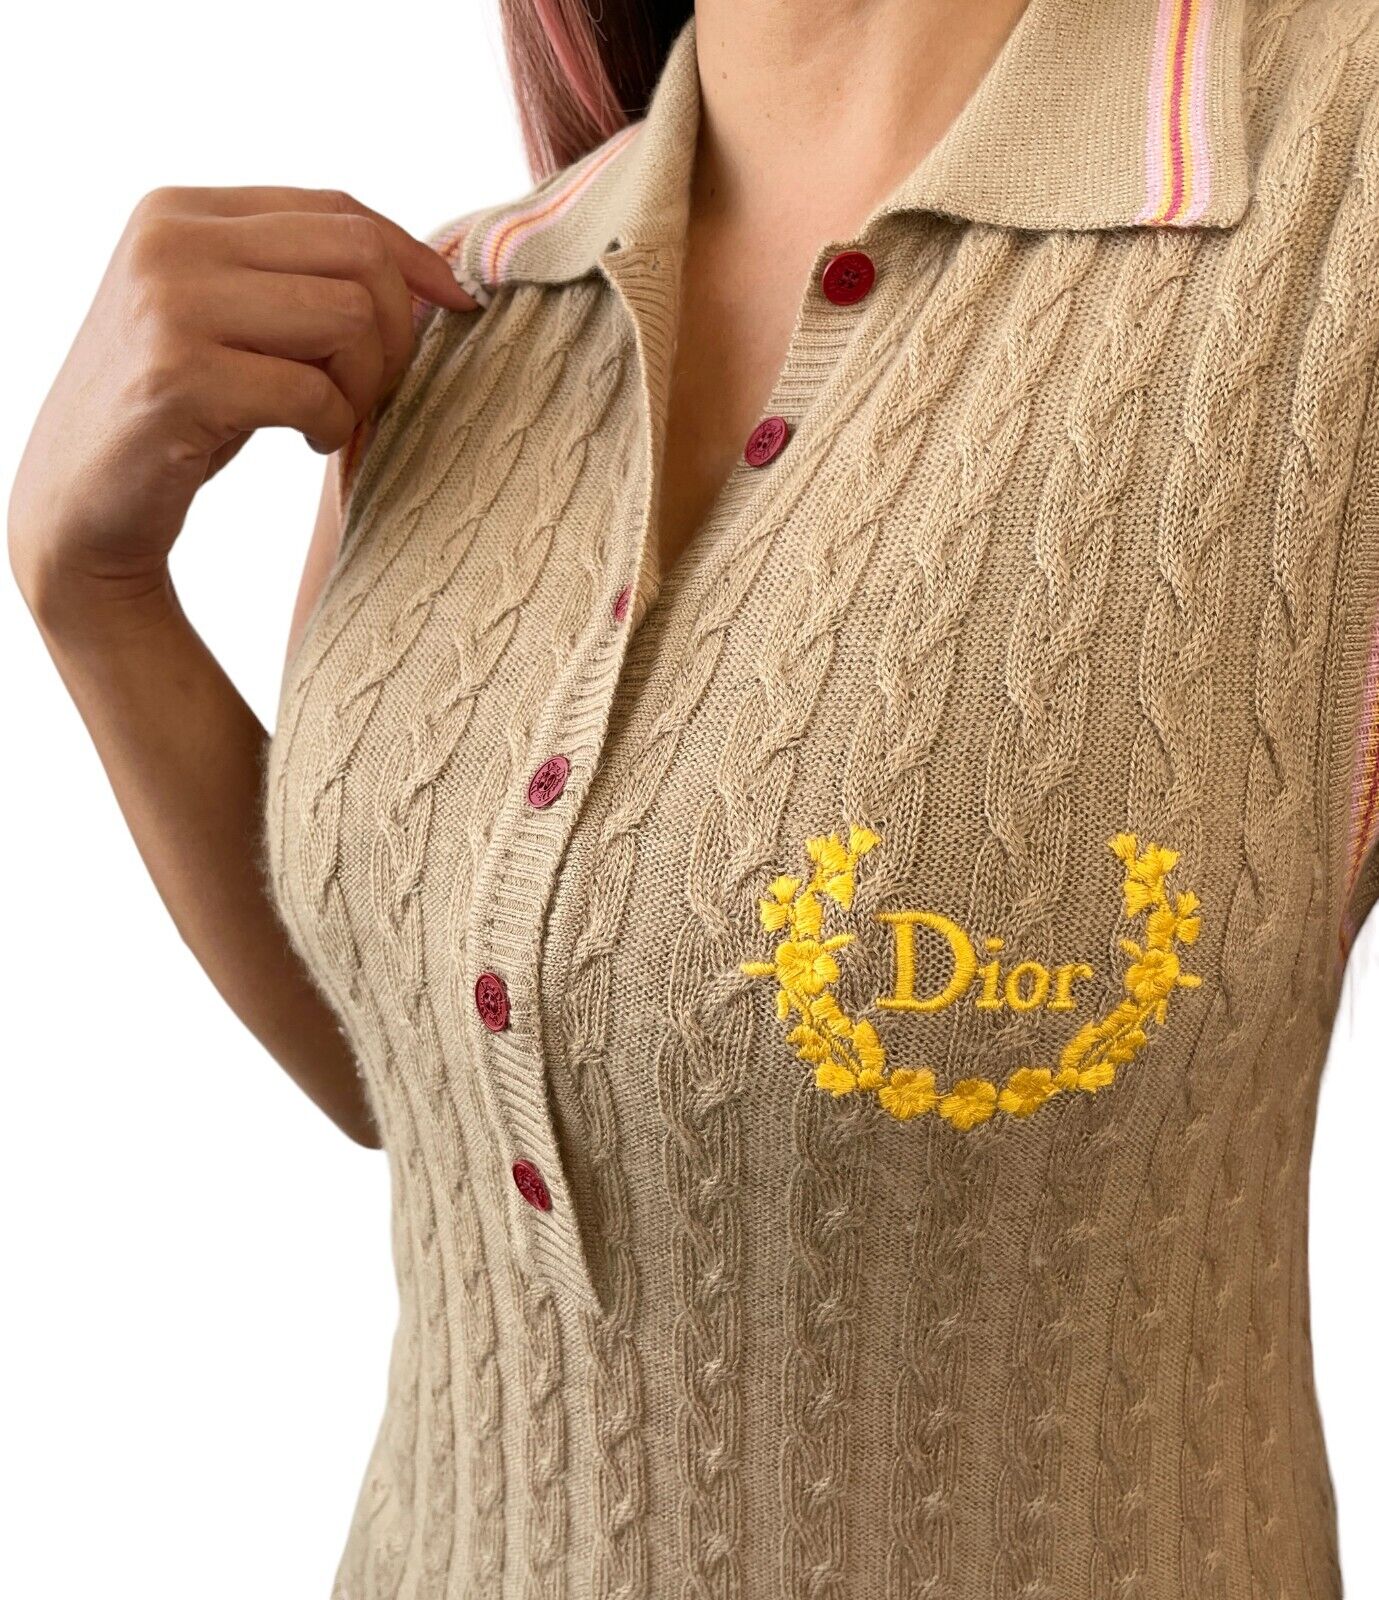 Christian Dior Vintage Logo Knit Polo Shirt #40 Beige Cashmere Button RankAB